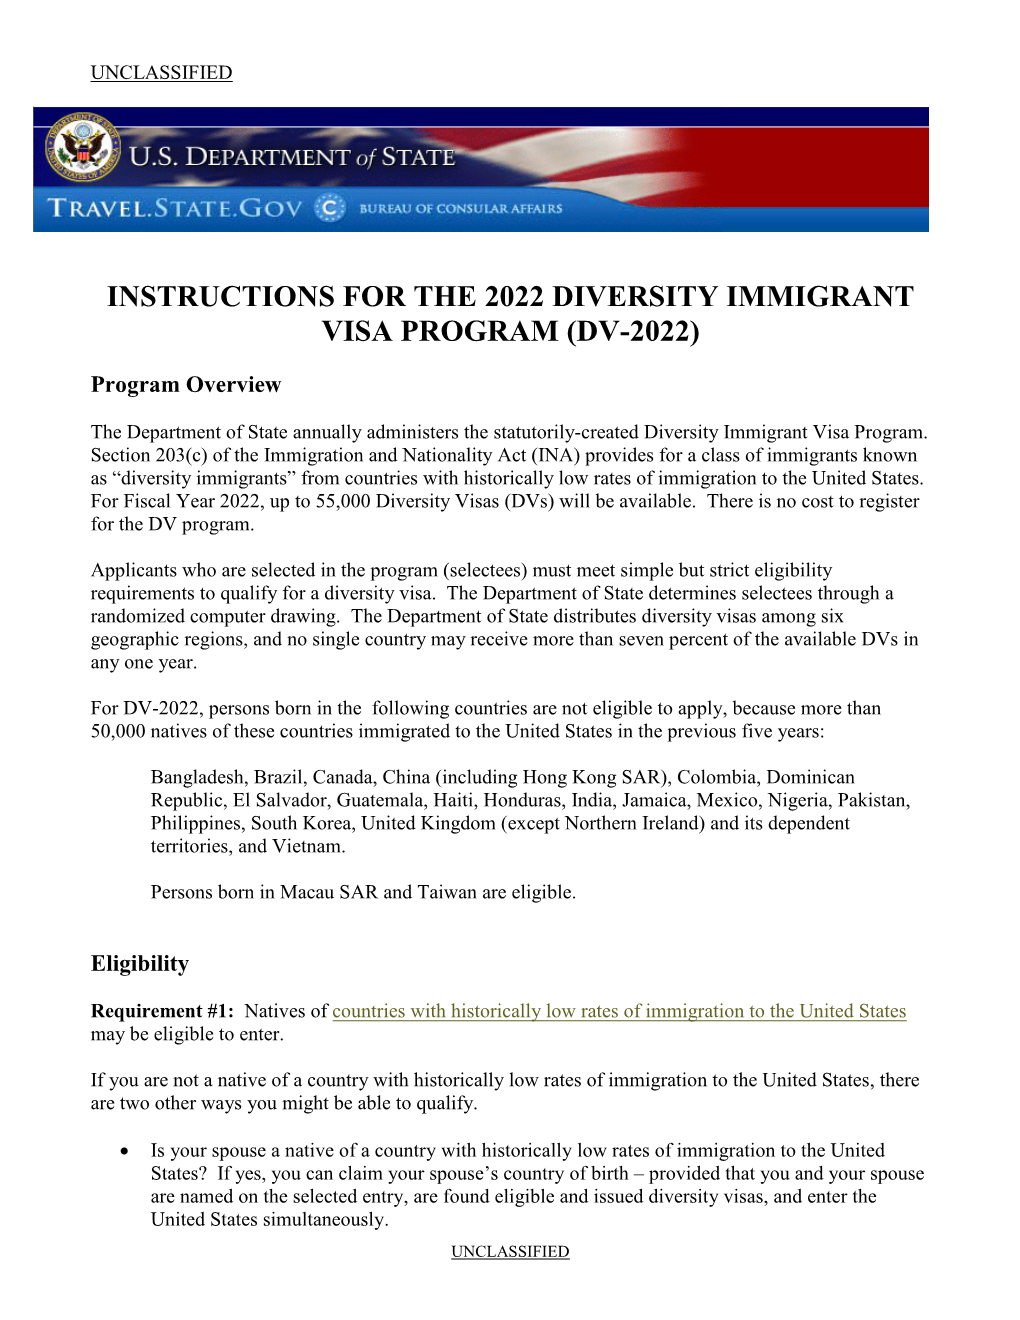 Instructions for the 2022 Diversity Immigrant Visa Program (Dv-2022)